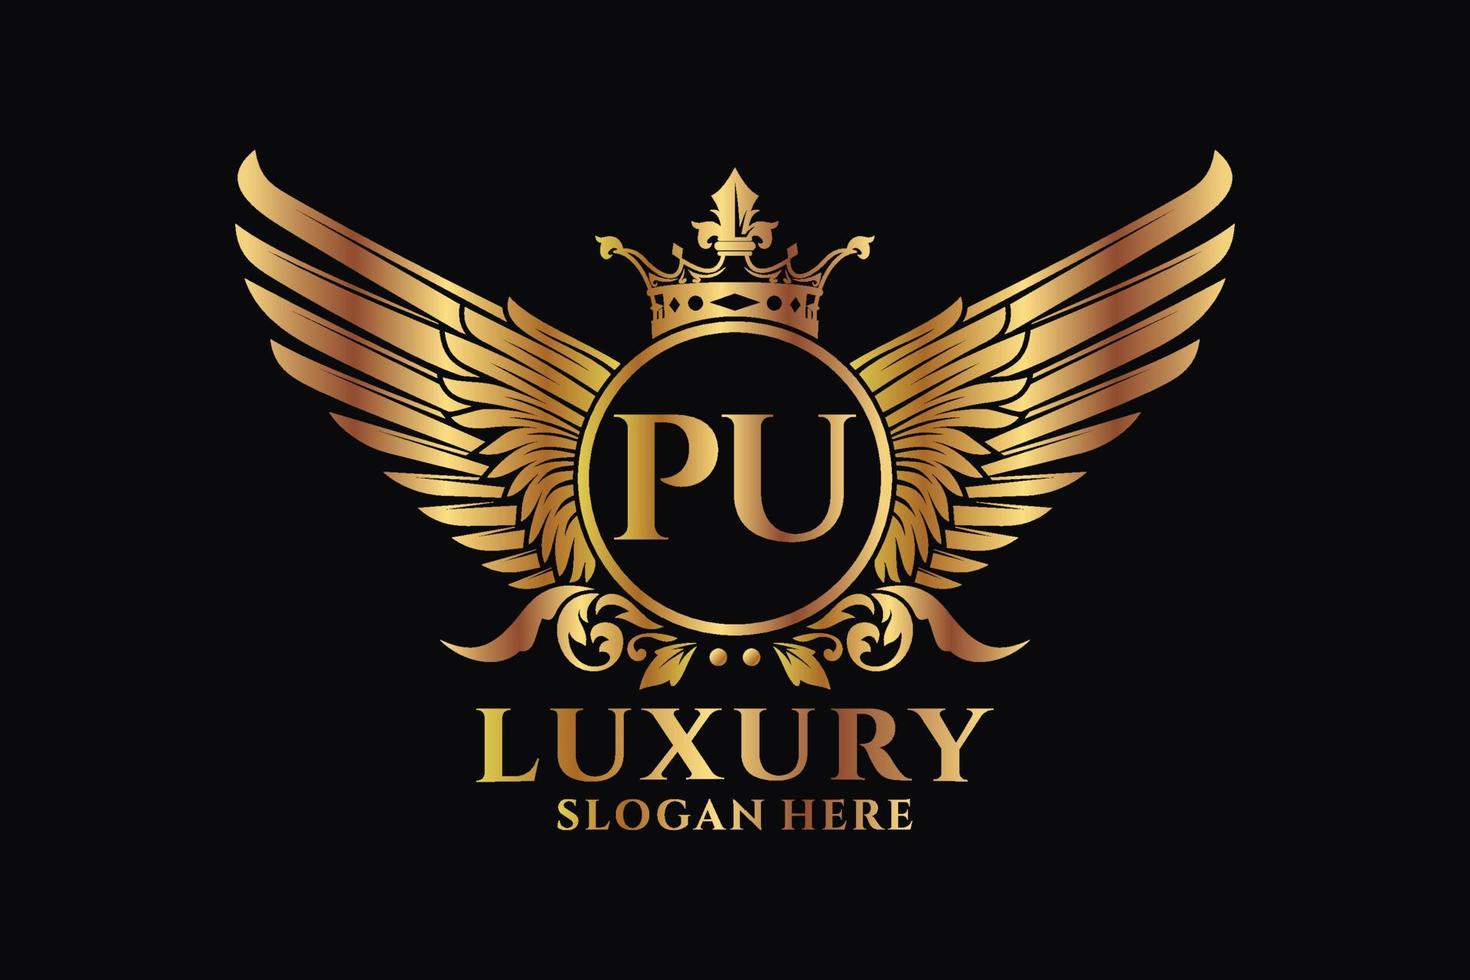 luxe Koninklijk vleugel brief pu kam goud kleur logo vector, zege logo, kam logo, vleugel logo, vector logo sjabloon.